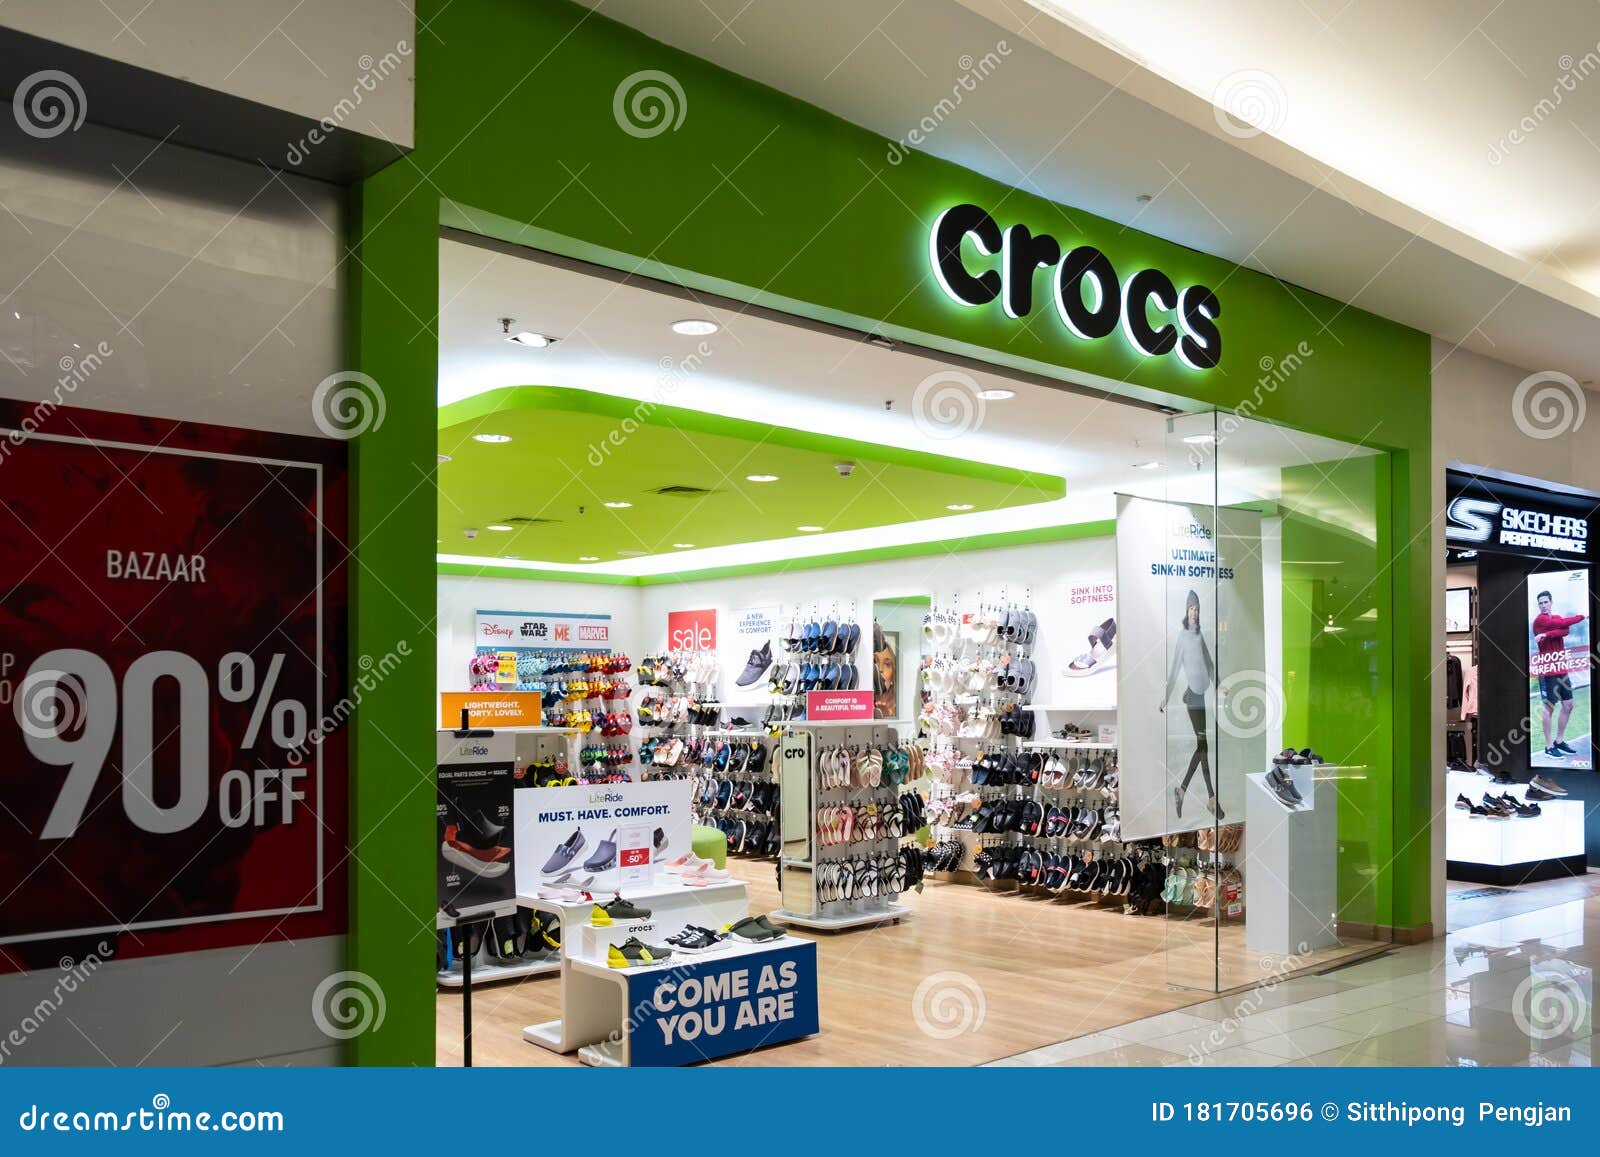 crocs mall of africa